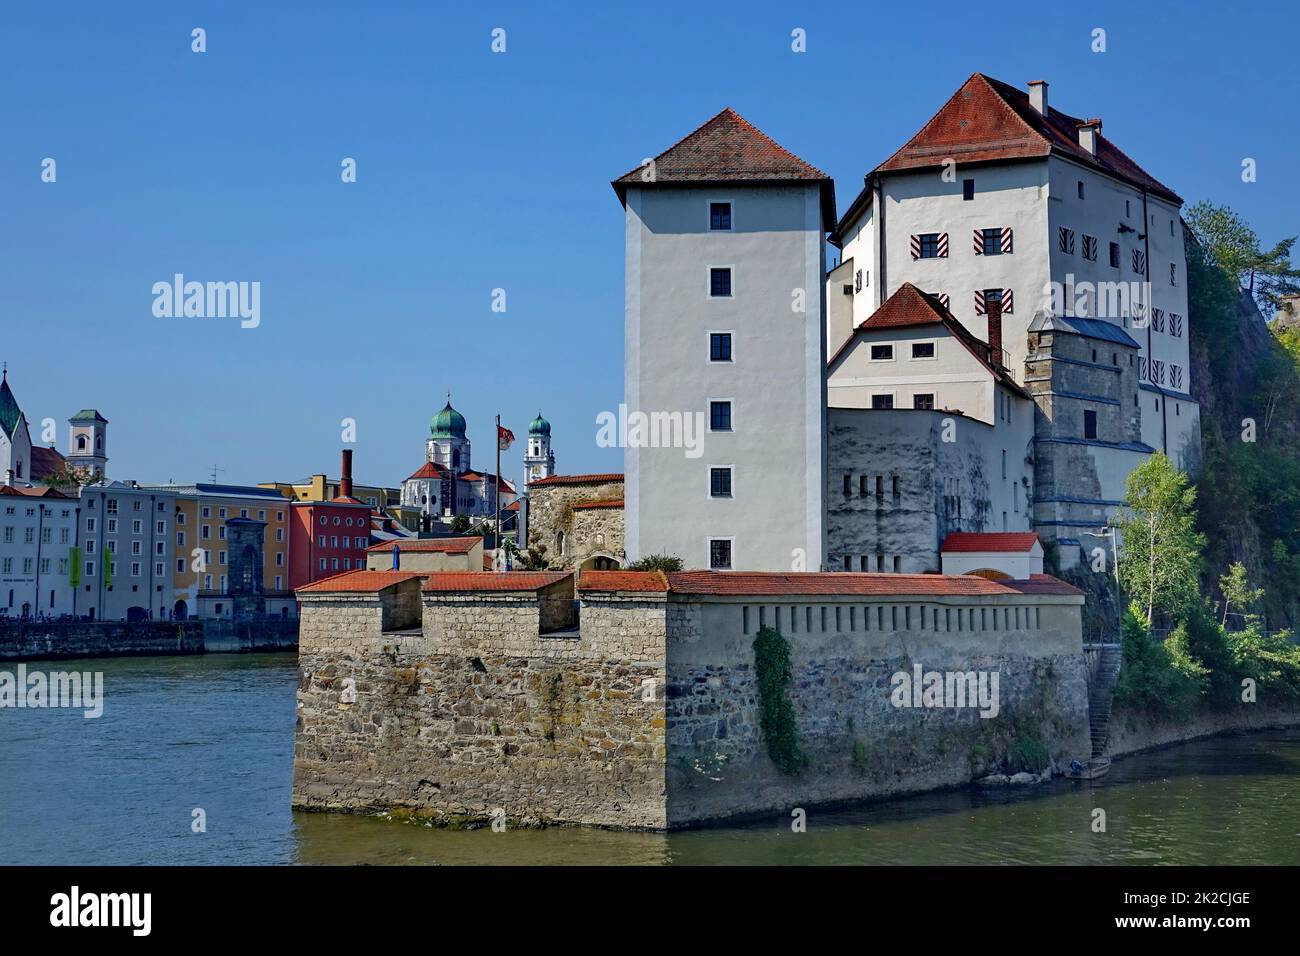 Bavaria, Lower Bavaria, Passau, City of three rivers, Veste Niederhaus, Danube, ilz river, geography, tourism Stock Photo